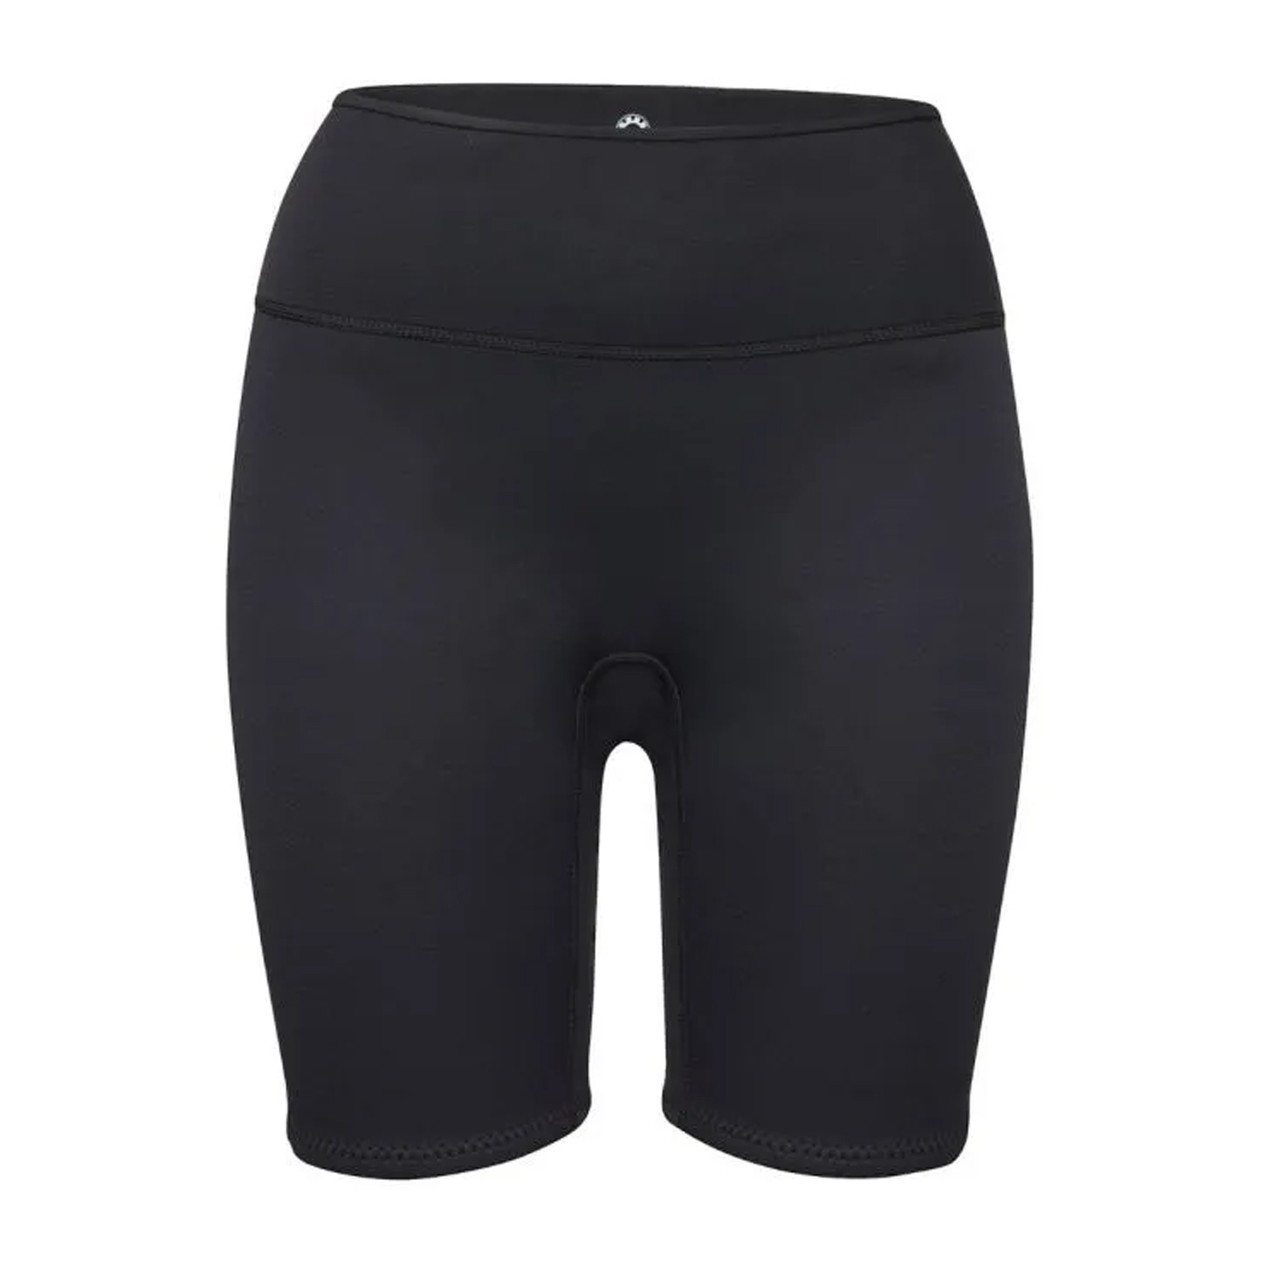 Sea-Doo New OEM, Women's Extra Large Protective Nylon Neoprene Shorts 2867861490